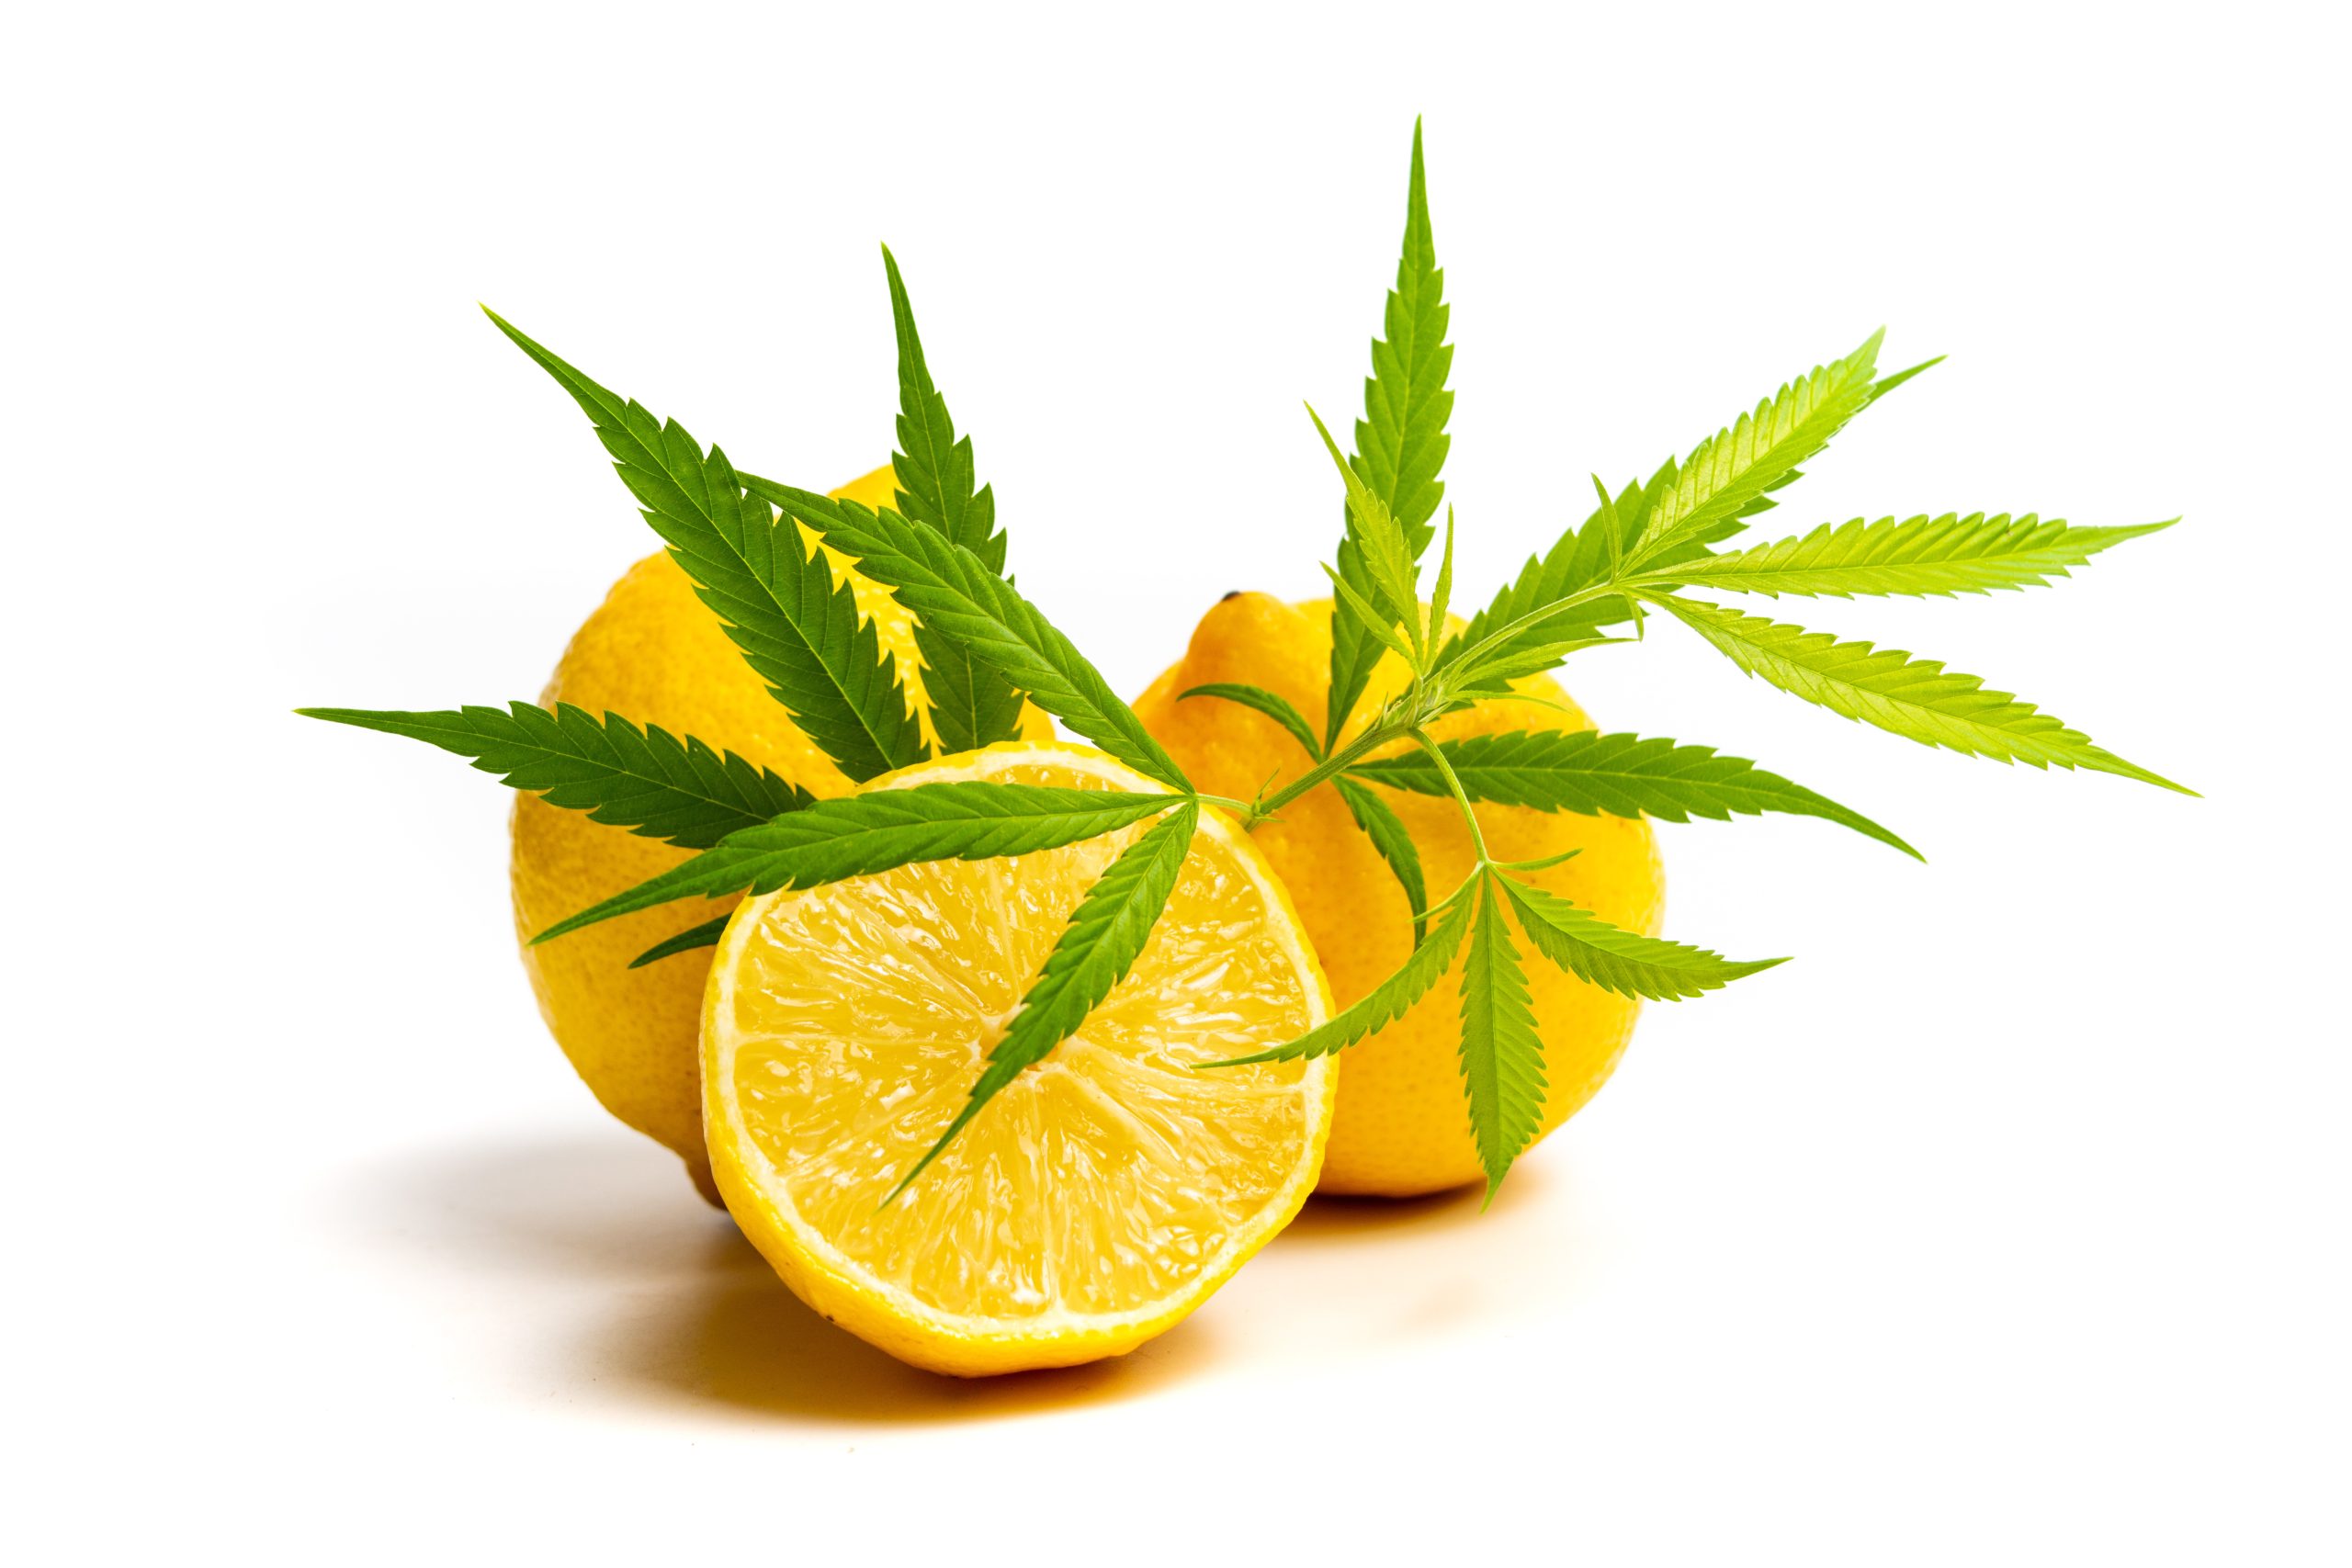 Cannabis leaf photographed with sliced lemons. 